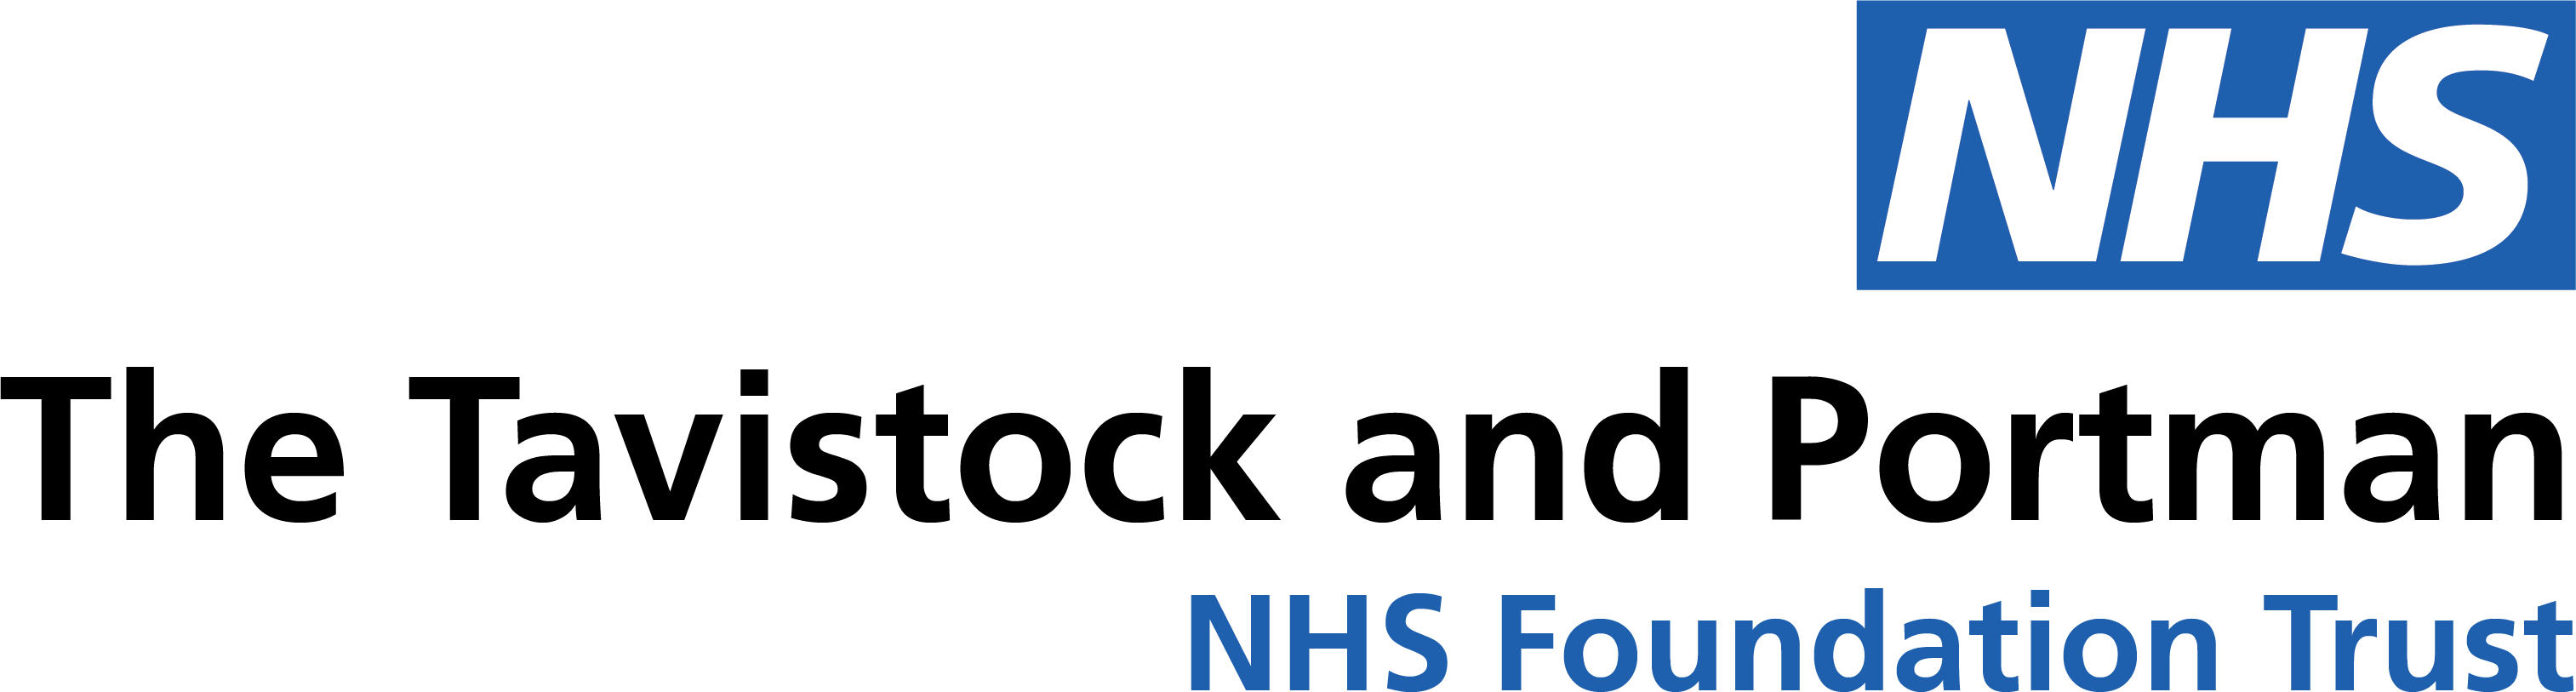 Tavistock and Portman NHS Foundation Trust